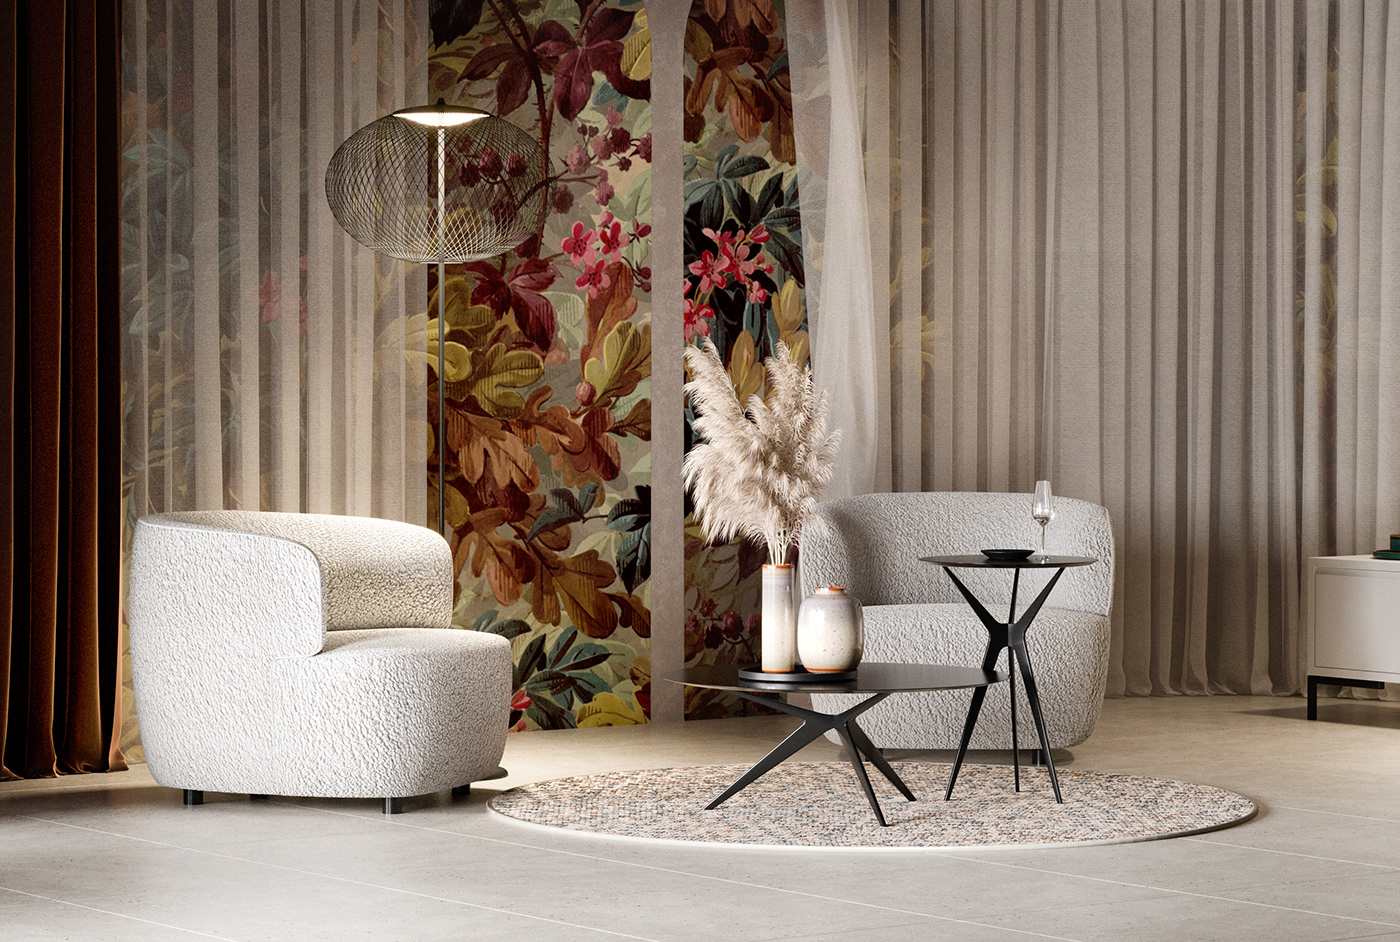 art direction  decor interior design  Japandi set design  staging contemporary elegant luxury modern